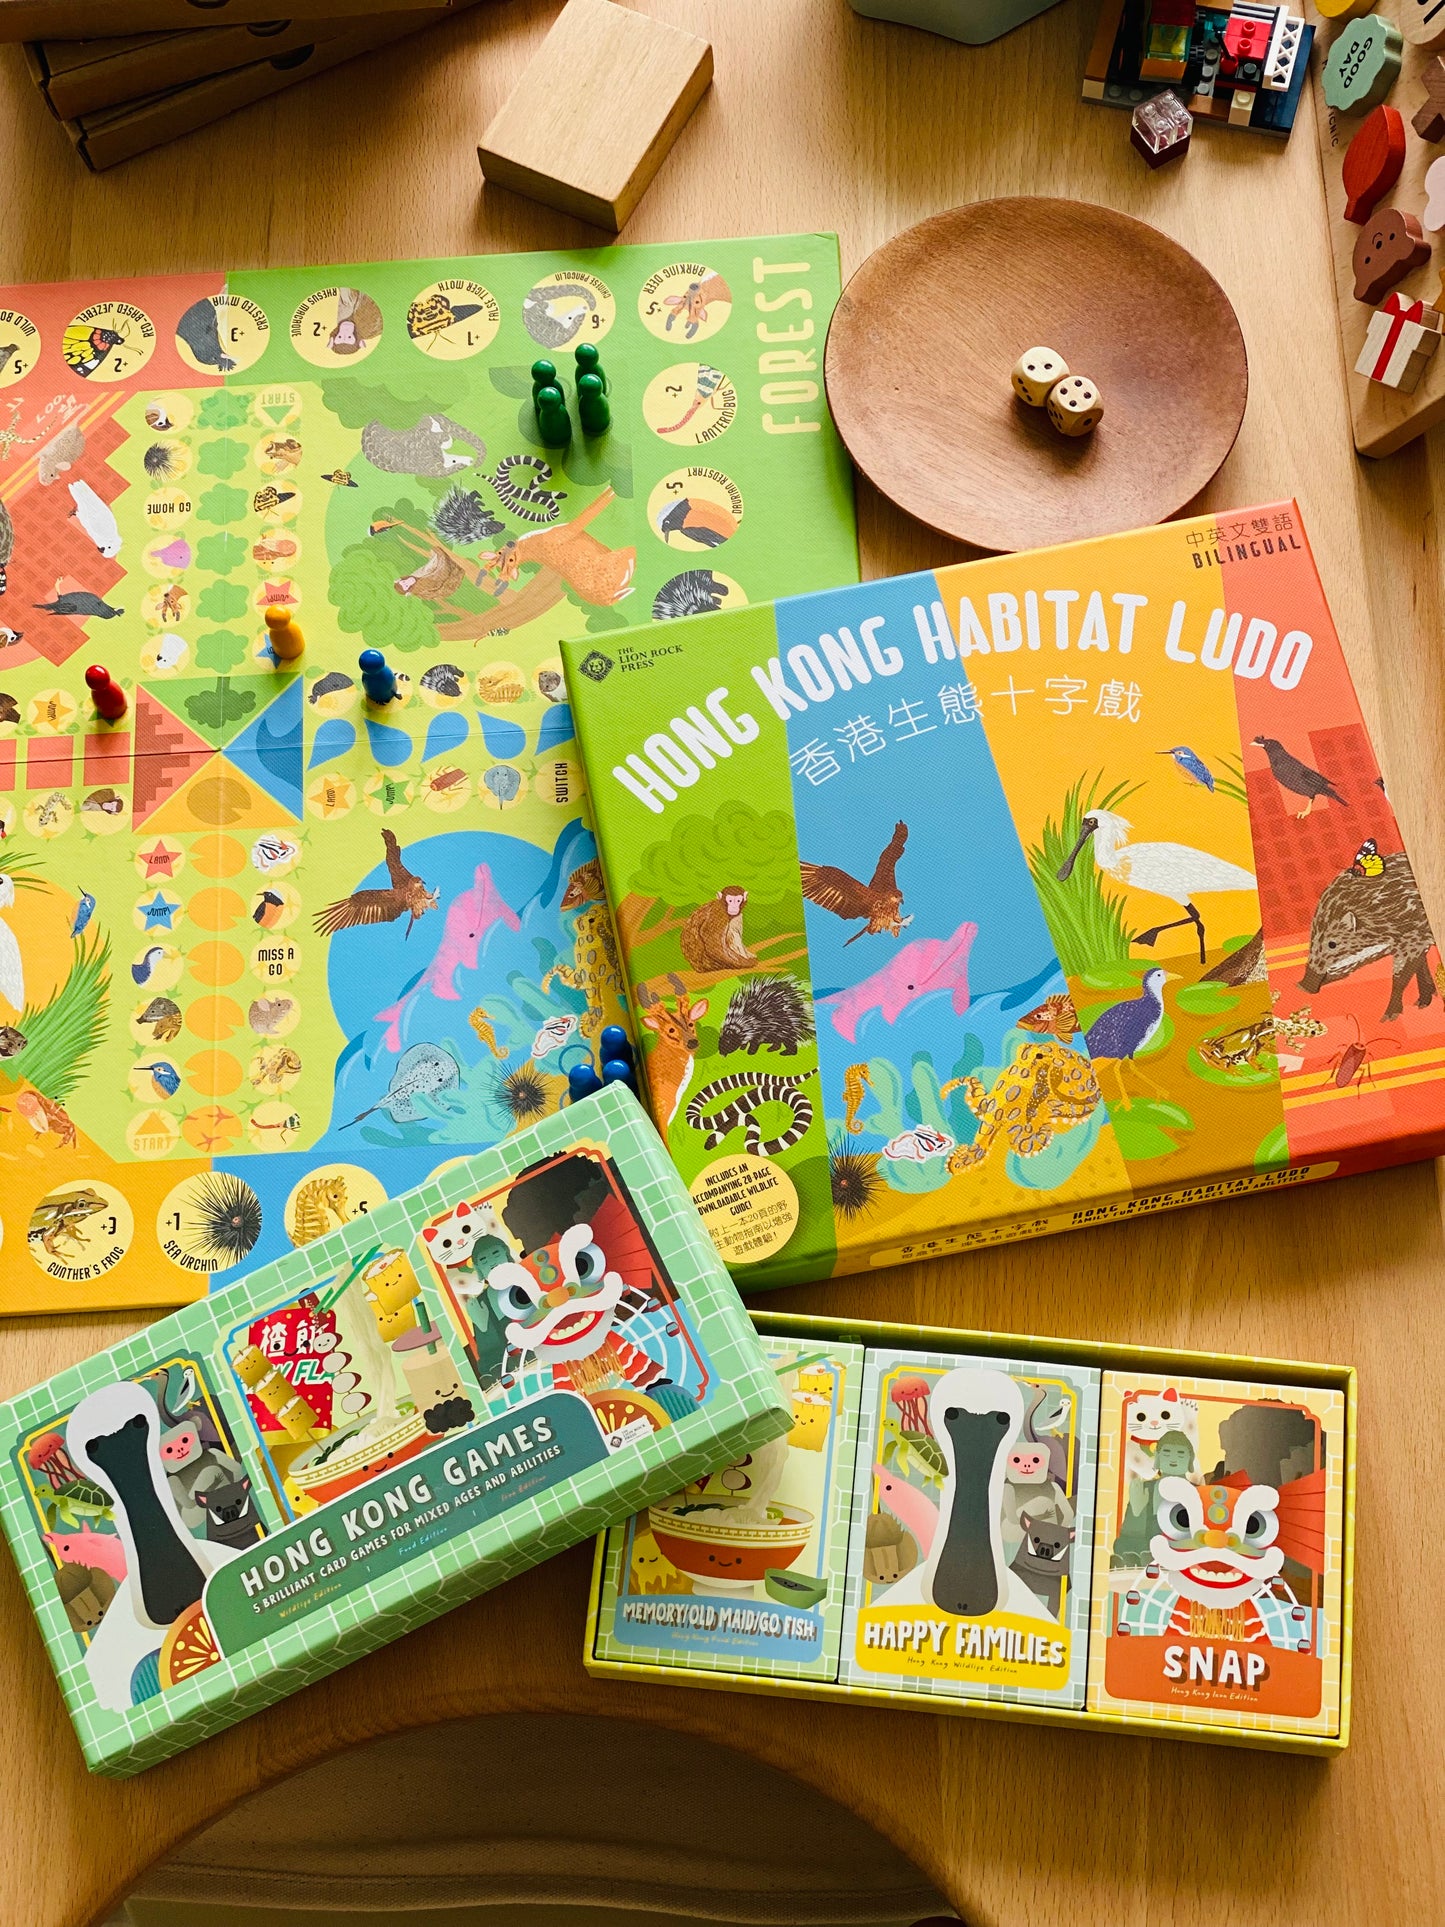 Hong Kong Habitat Ludo board game (Bilingual)